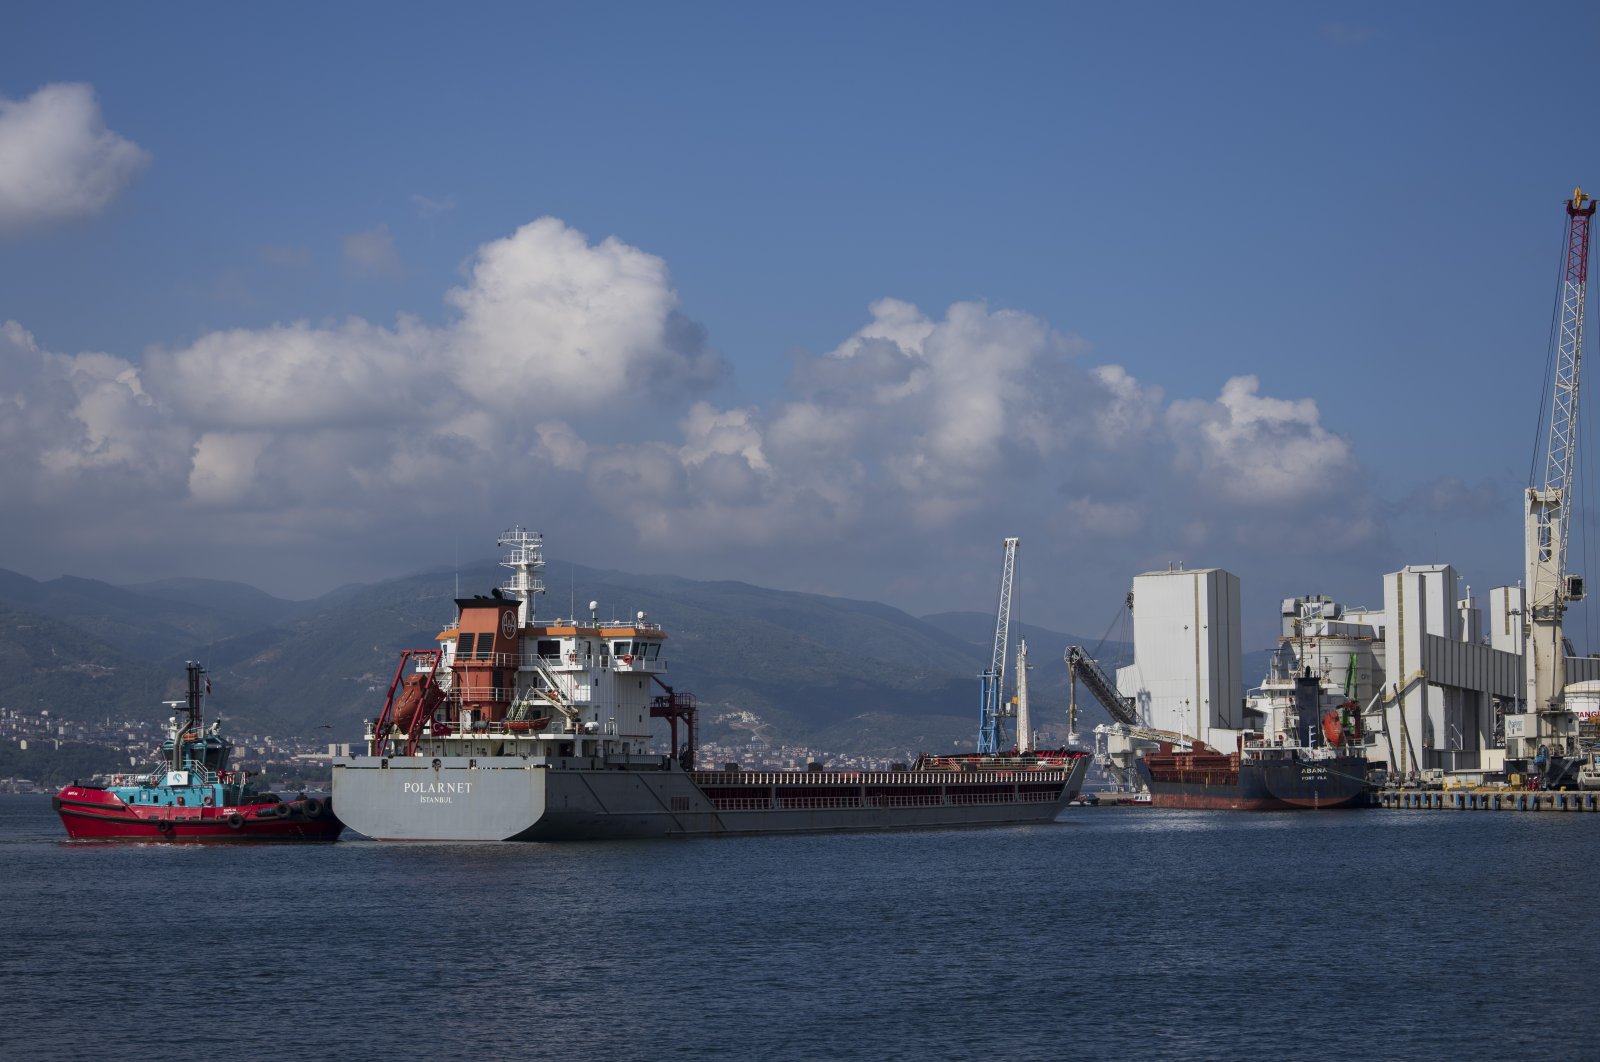 The cargo ship Polarnet (C) arrives at Derince port in the Gulf of Izmit, Türkiye, Aug. 8, 2022. (AP Photo)